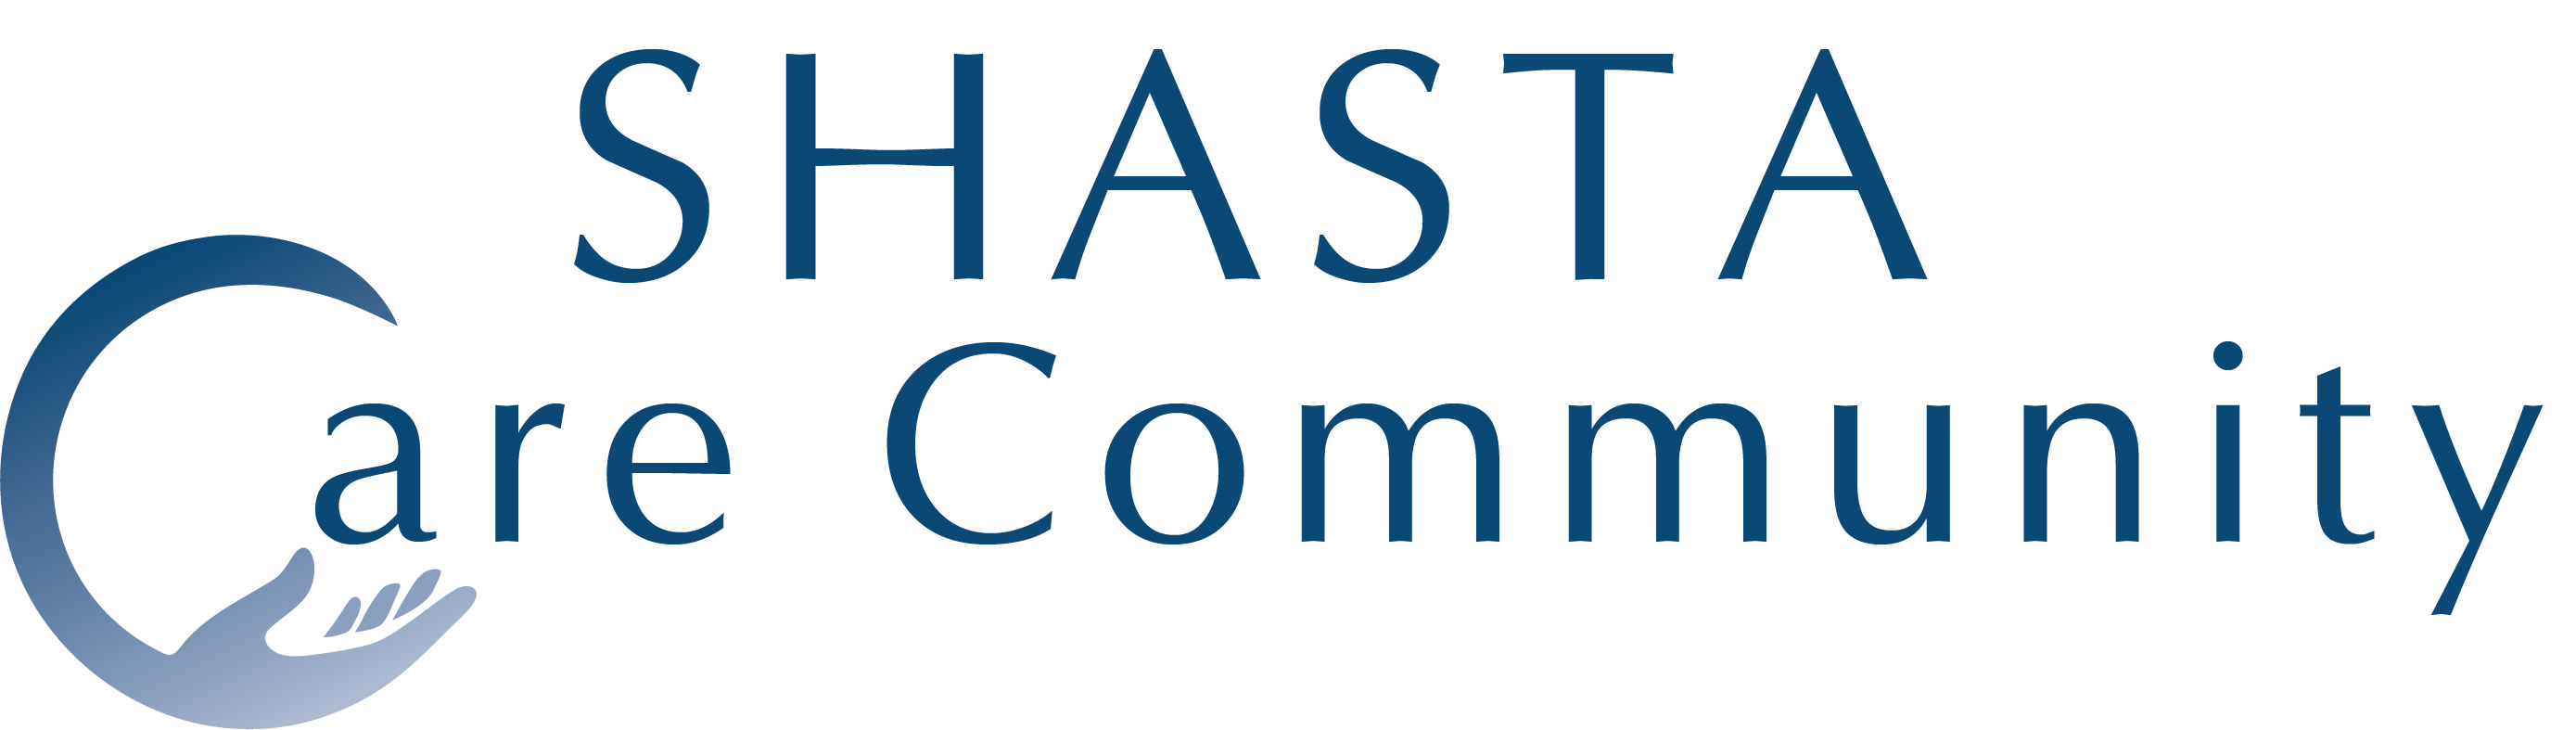 Shasta Care Community Logo